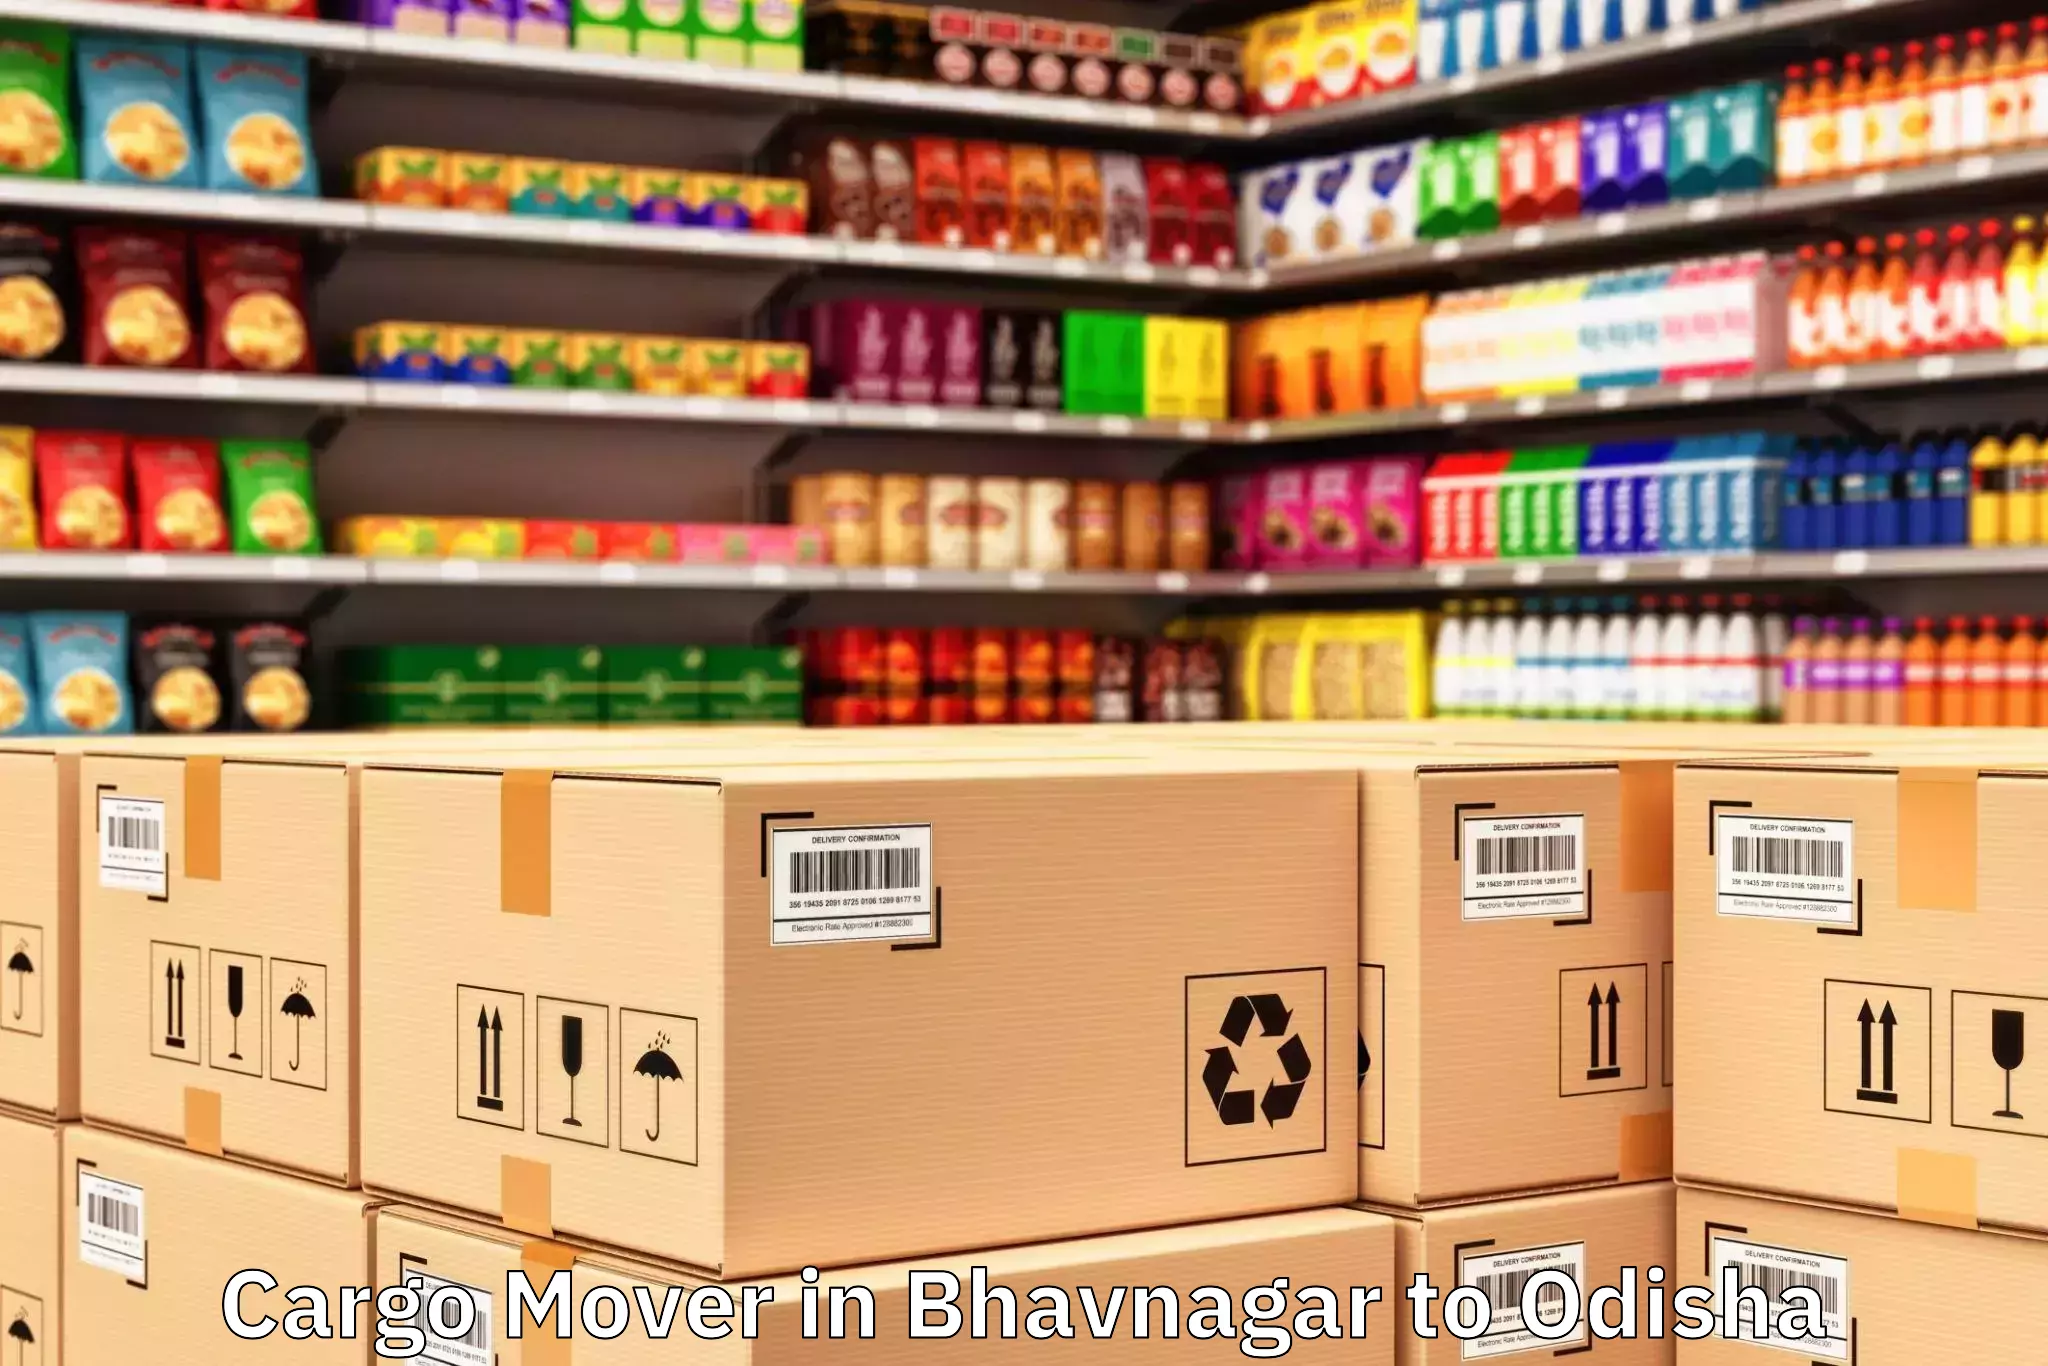 Efficient Bhavnagar to Mahulapada Cargo Mover